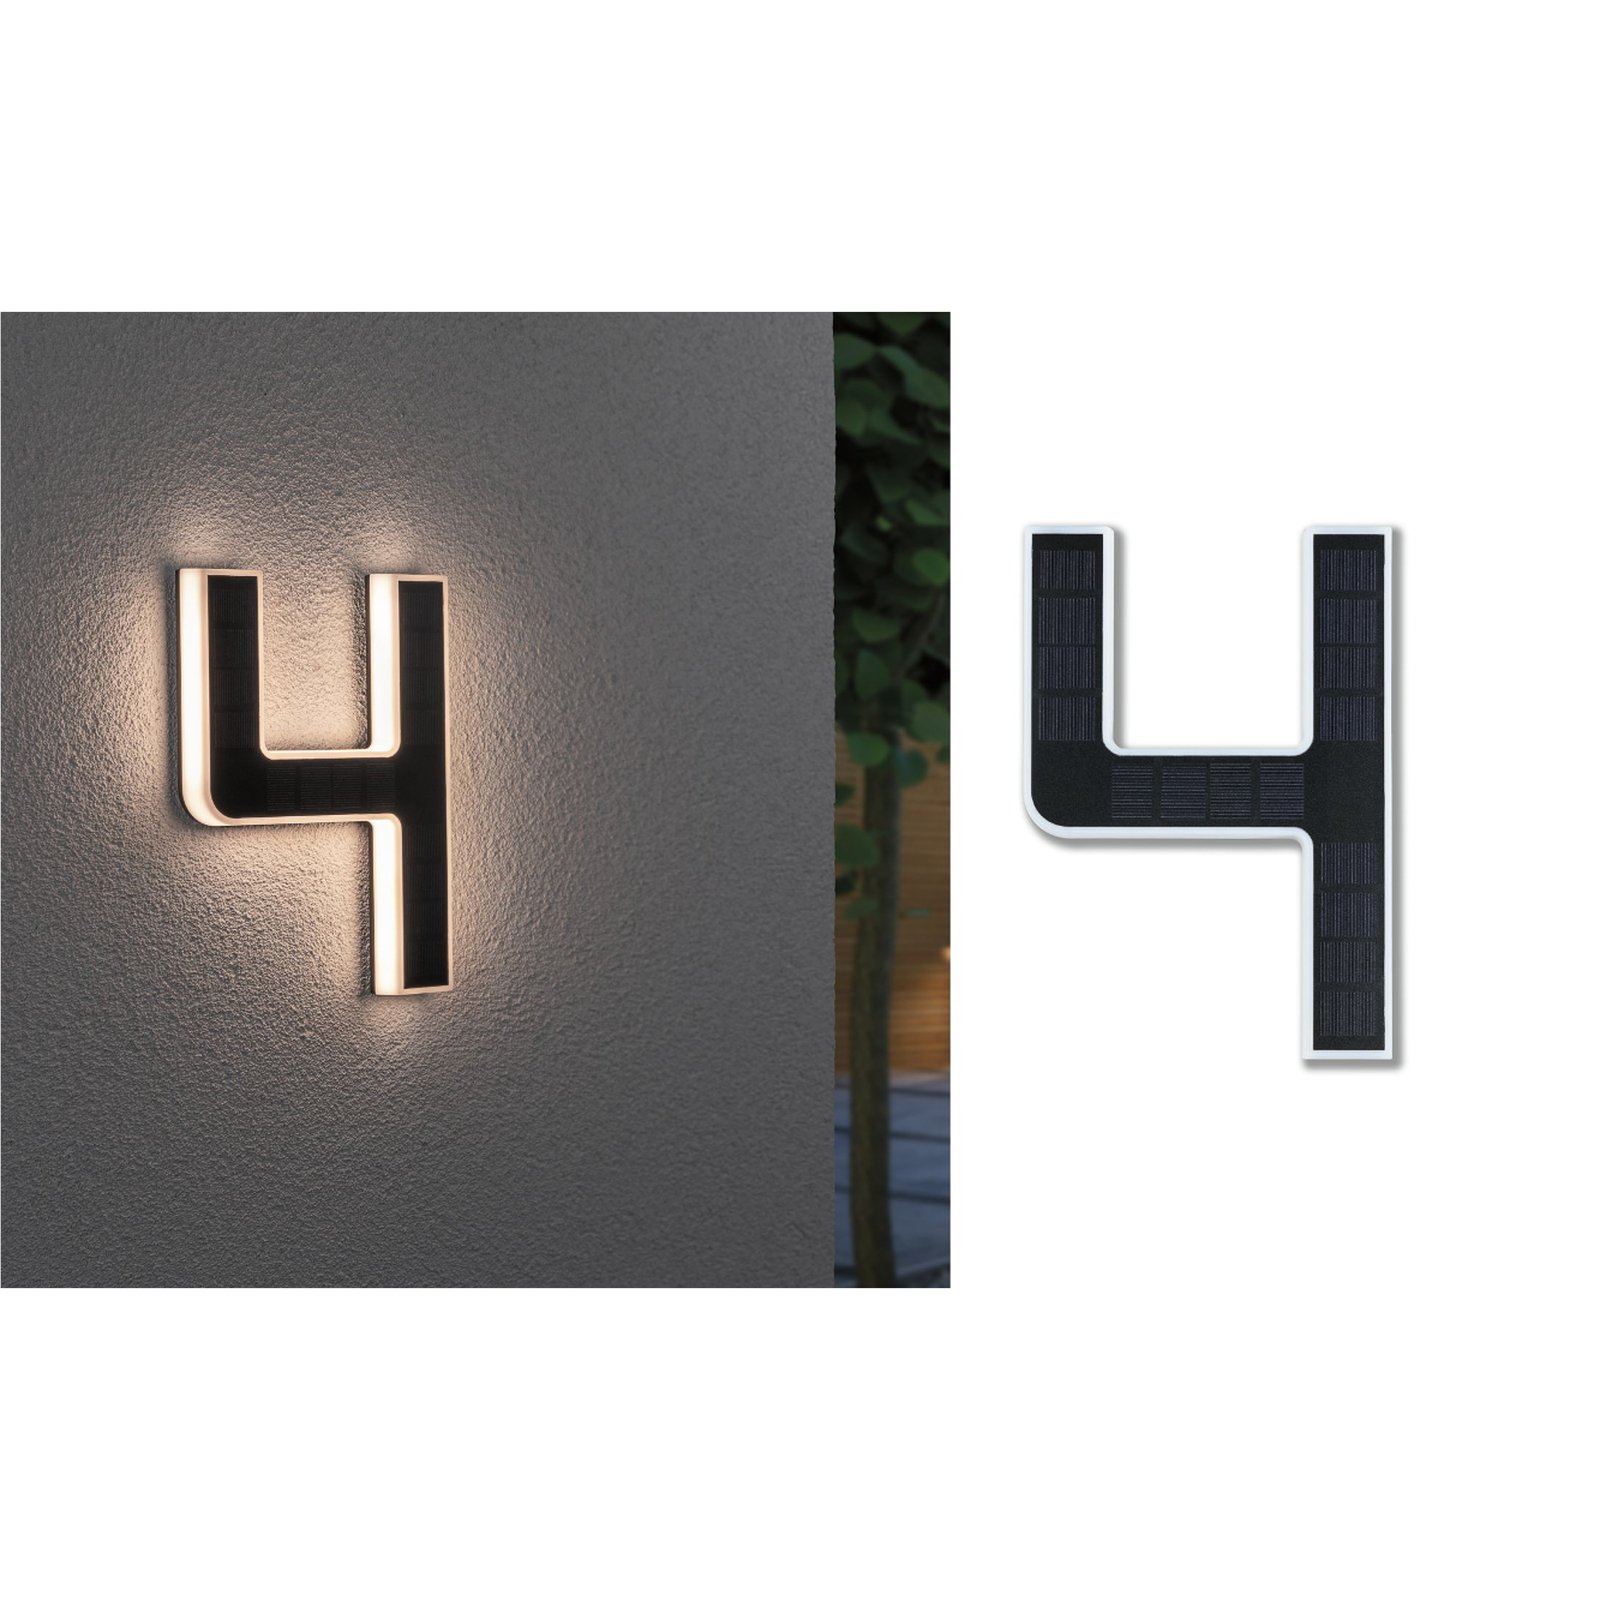 Paulmann LED solární číslo domu 4